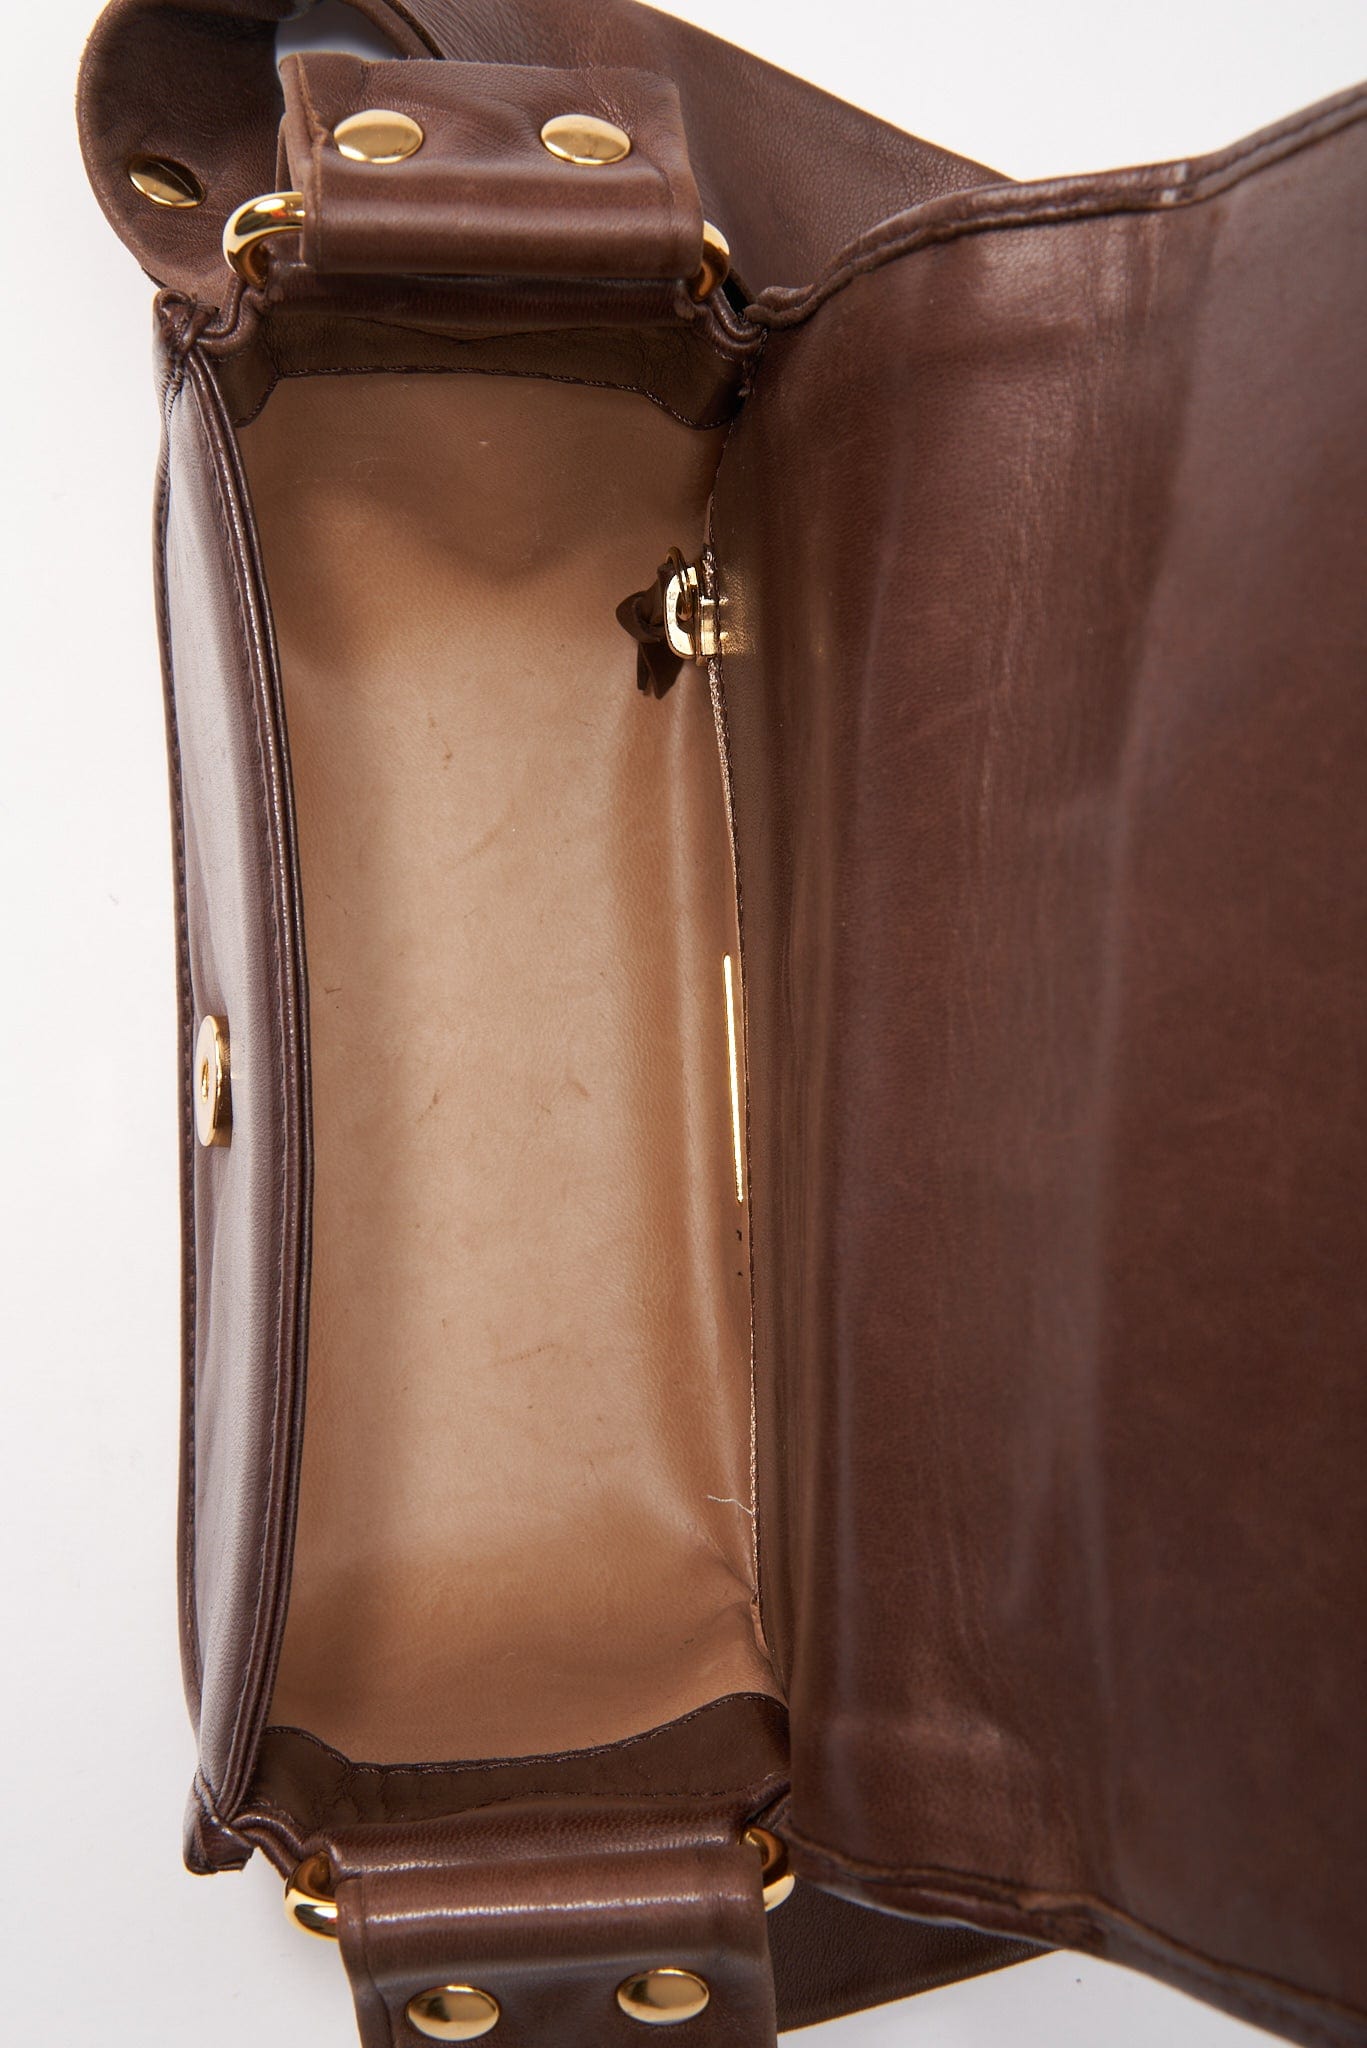 Bottega Veneta Intrecciato Leather Crossbody Bag with Studded Strap